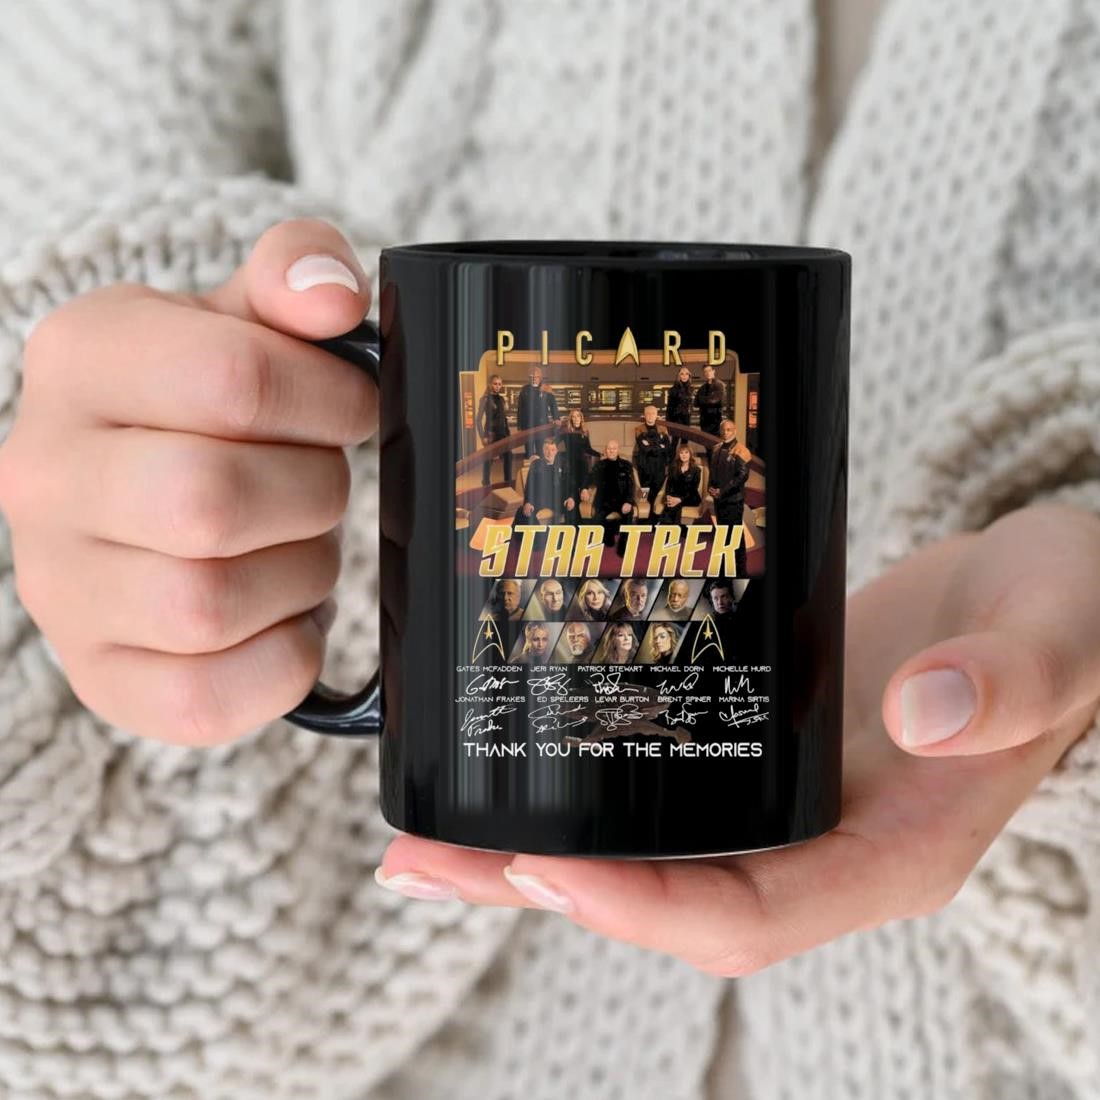 Picard Star Trek Thank You For The Memories Signature Mug